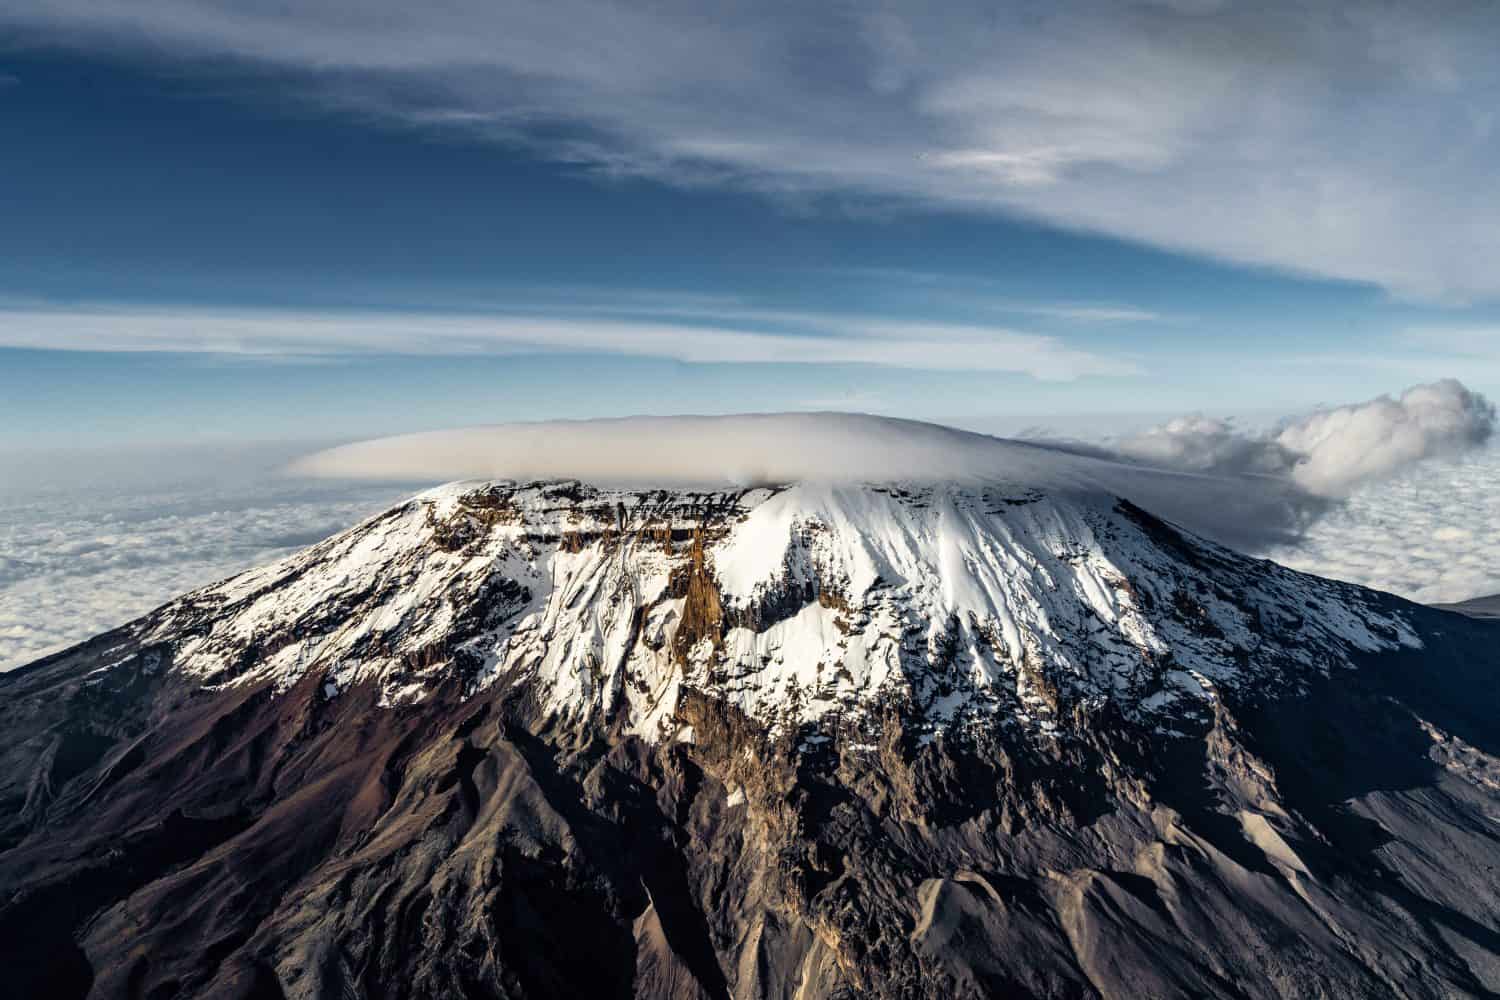 Kilimanjaro Mountain Aerial View during scenic flight